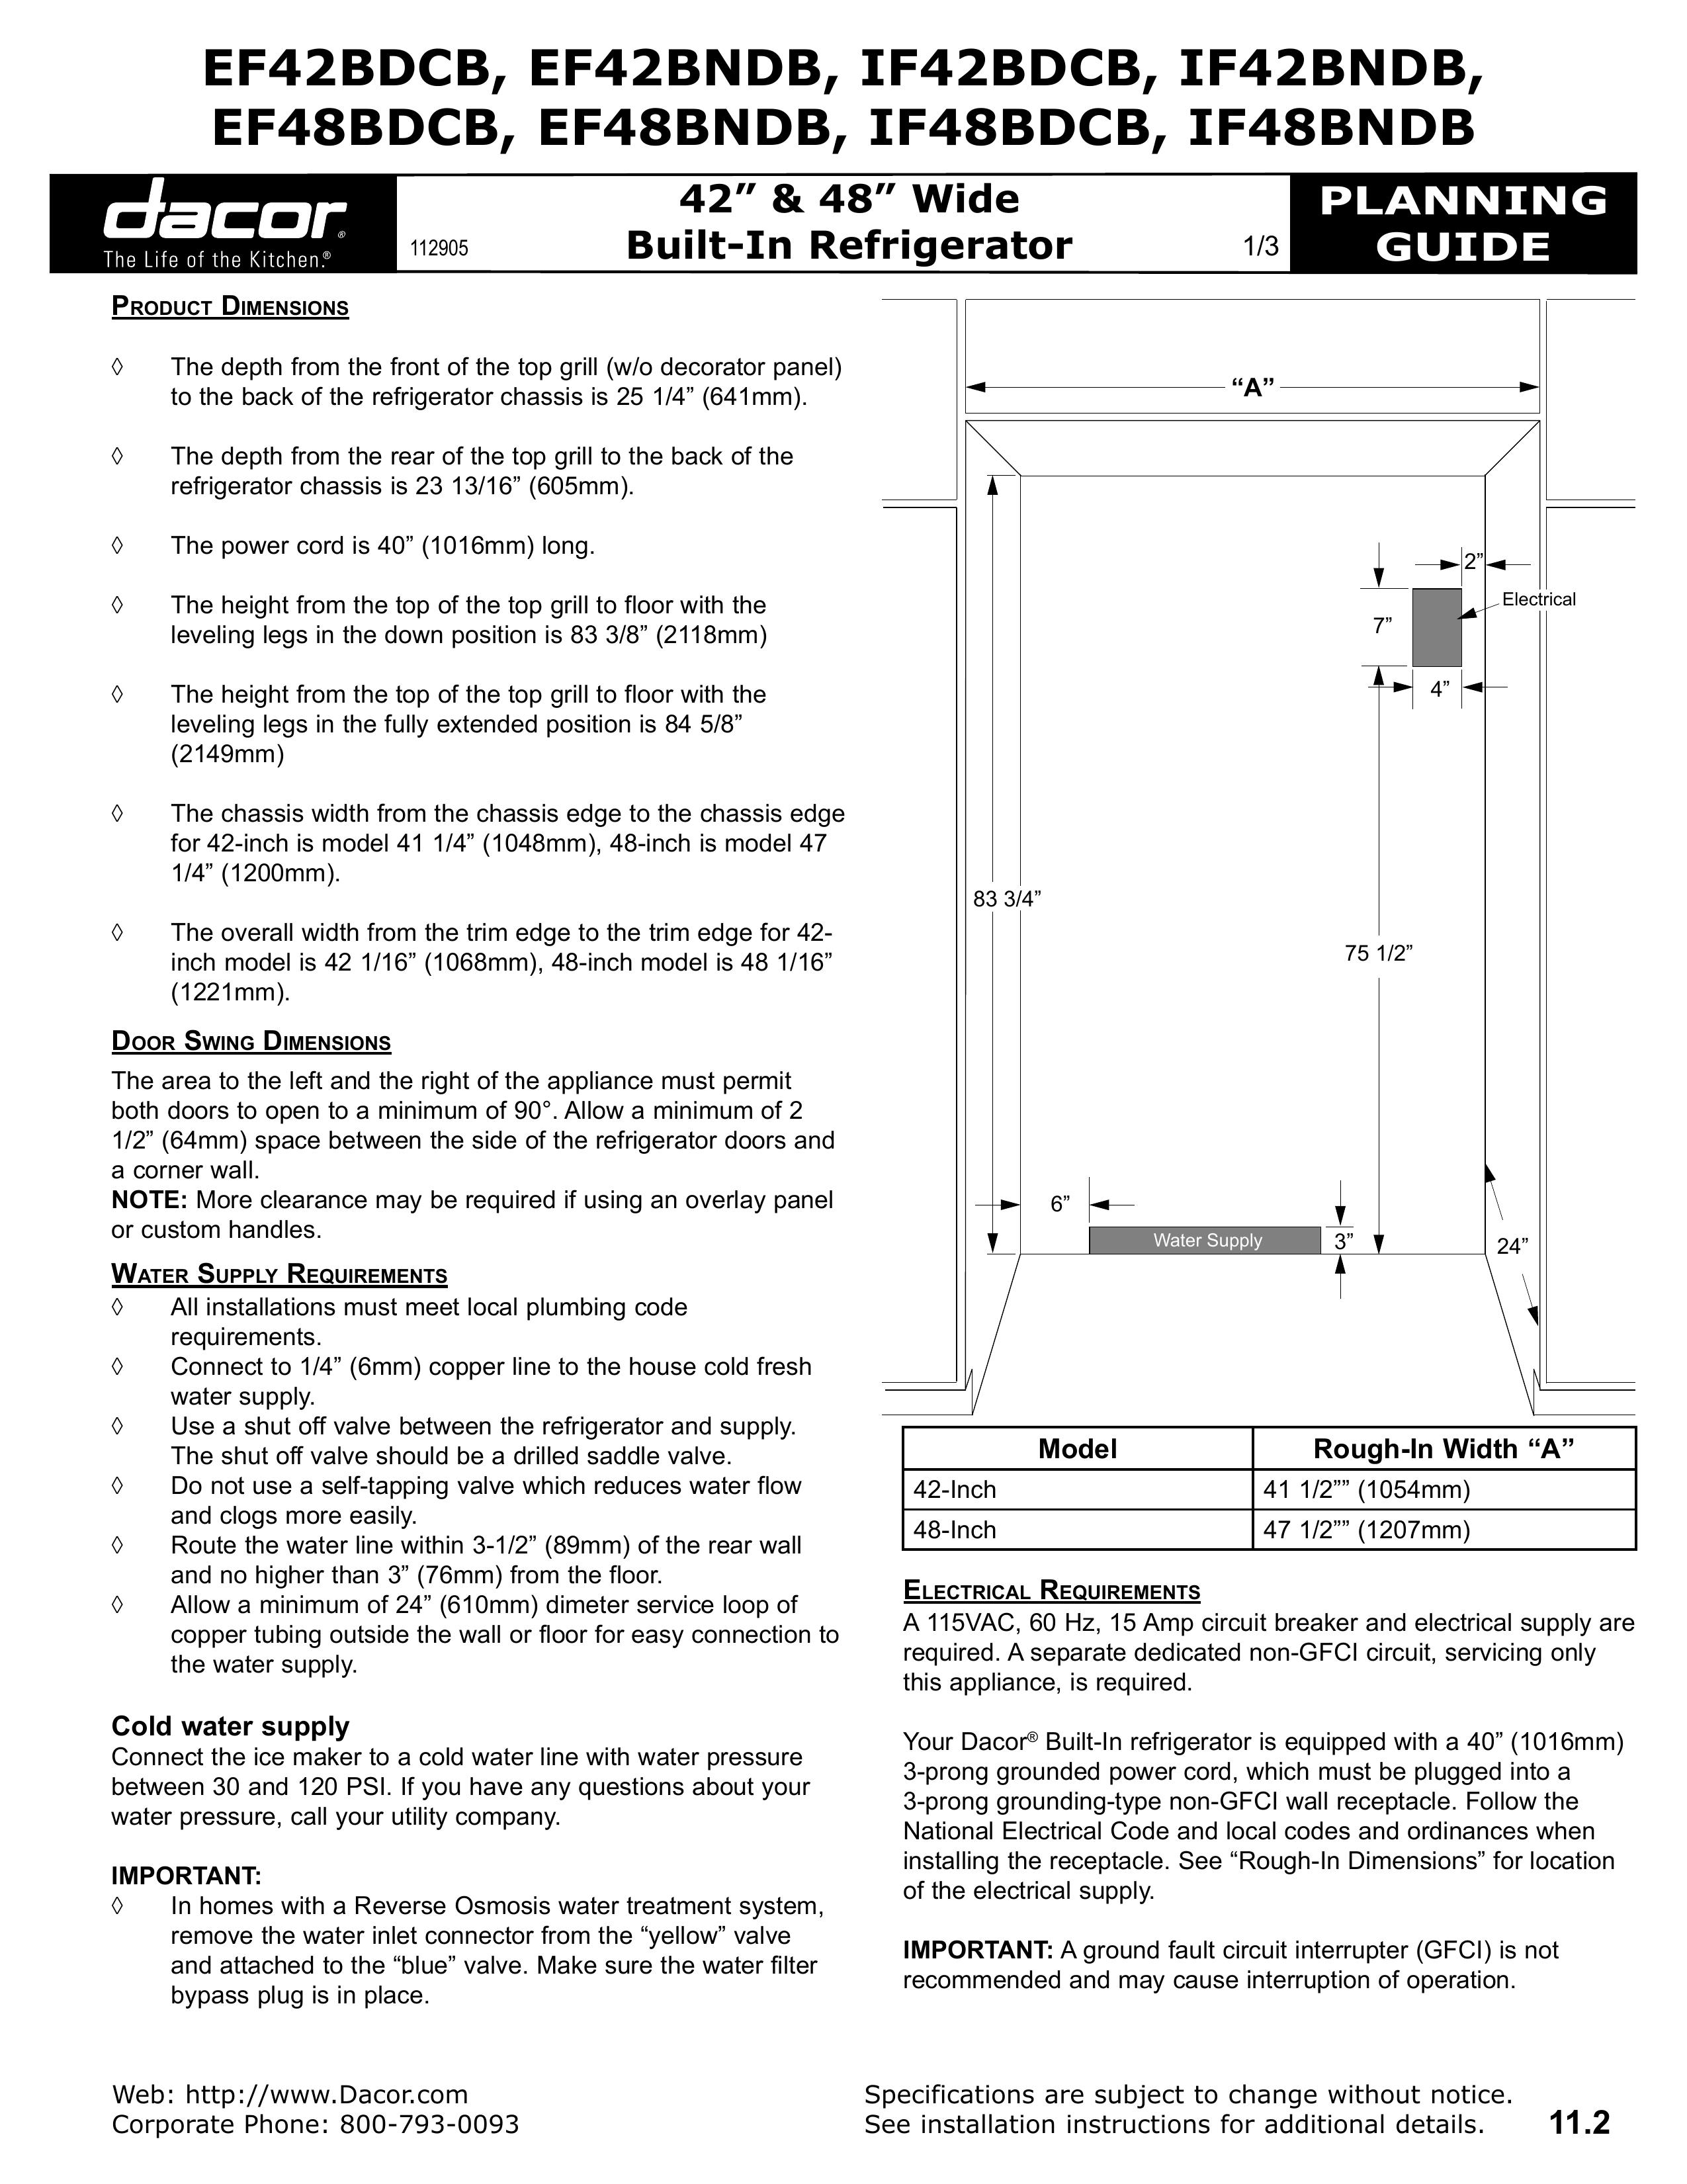 Dacor IF48BNDB Refrigerator User Manual